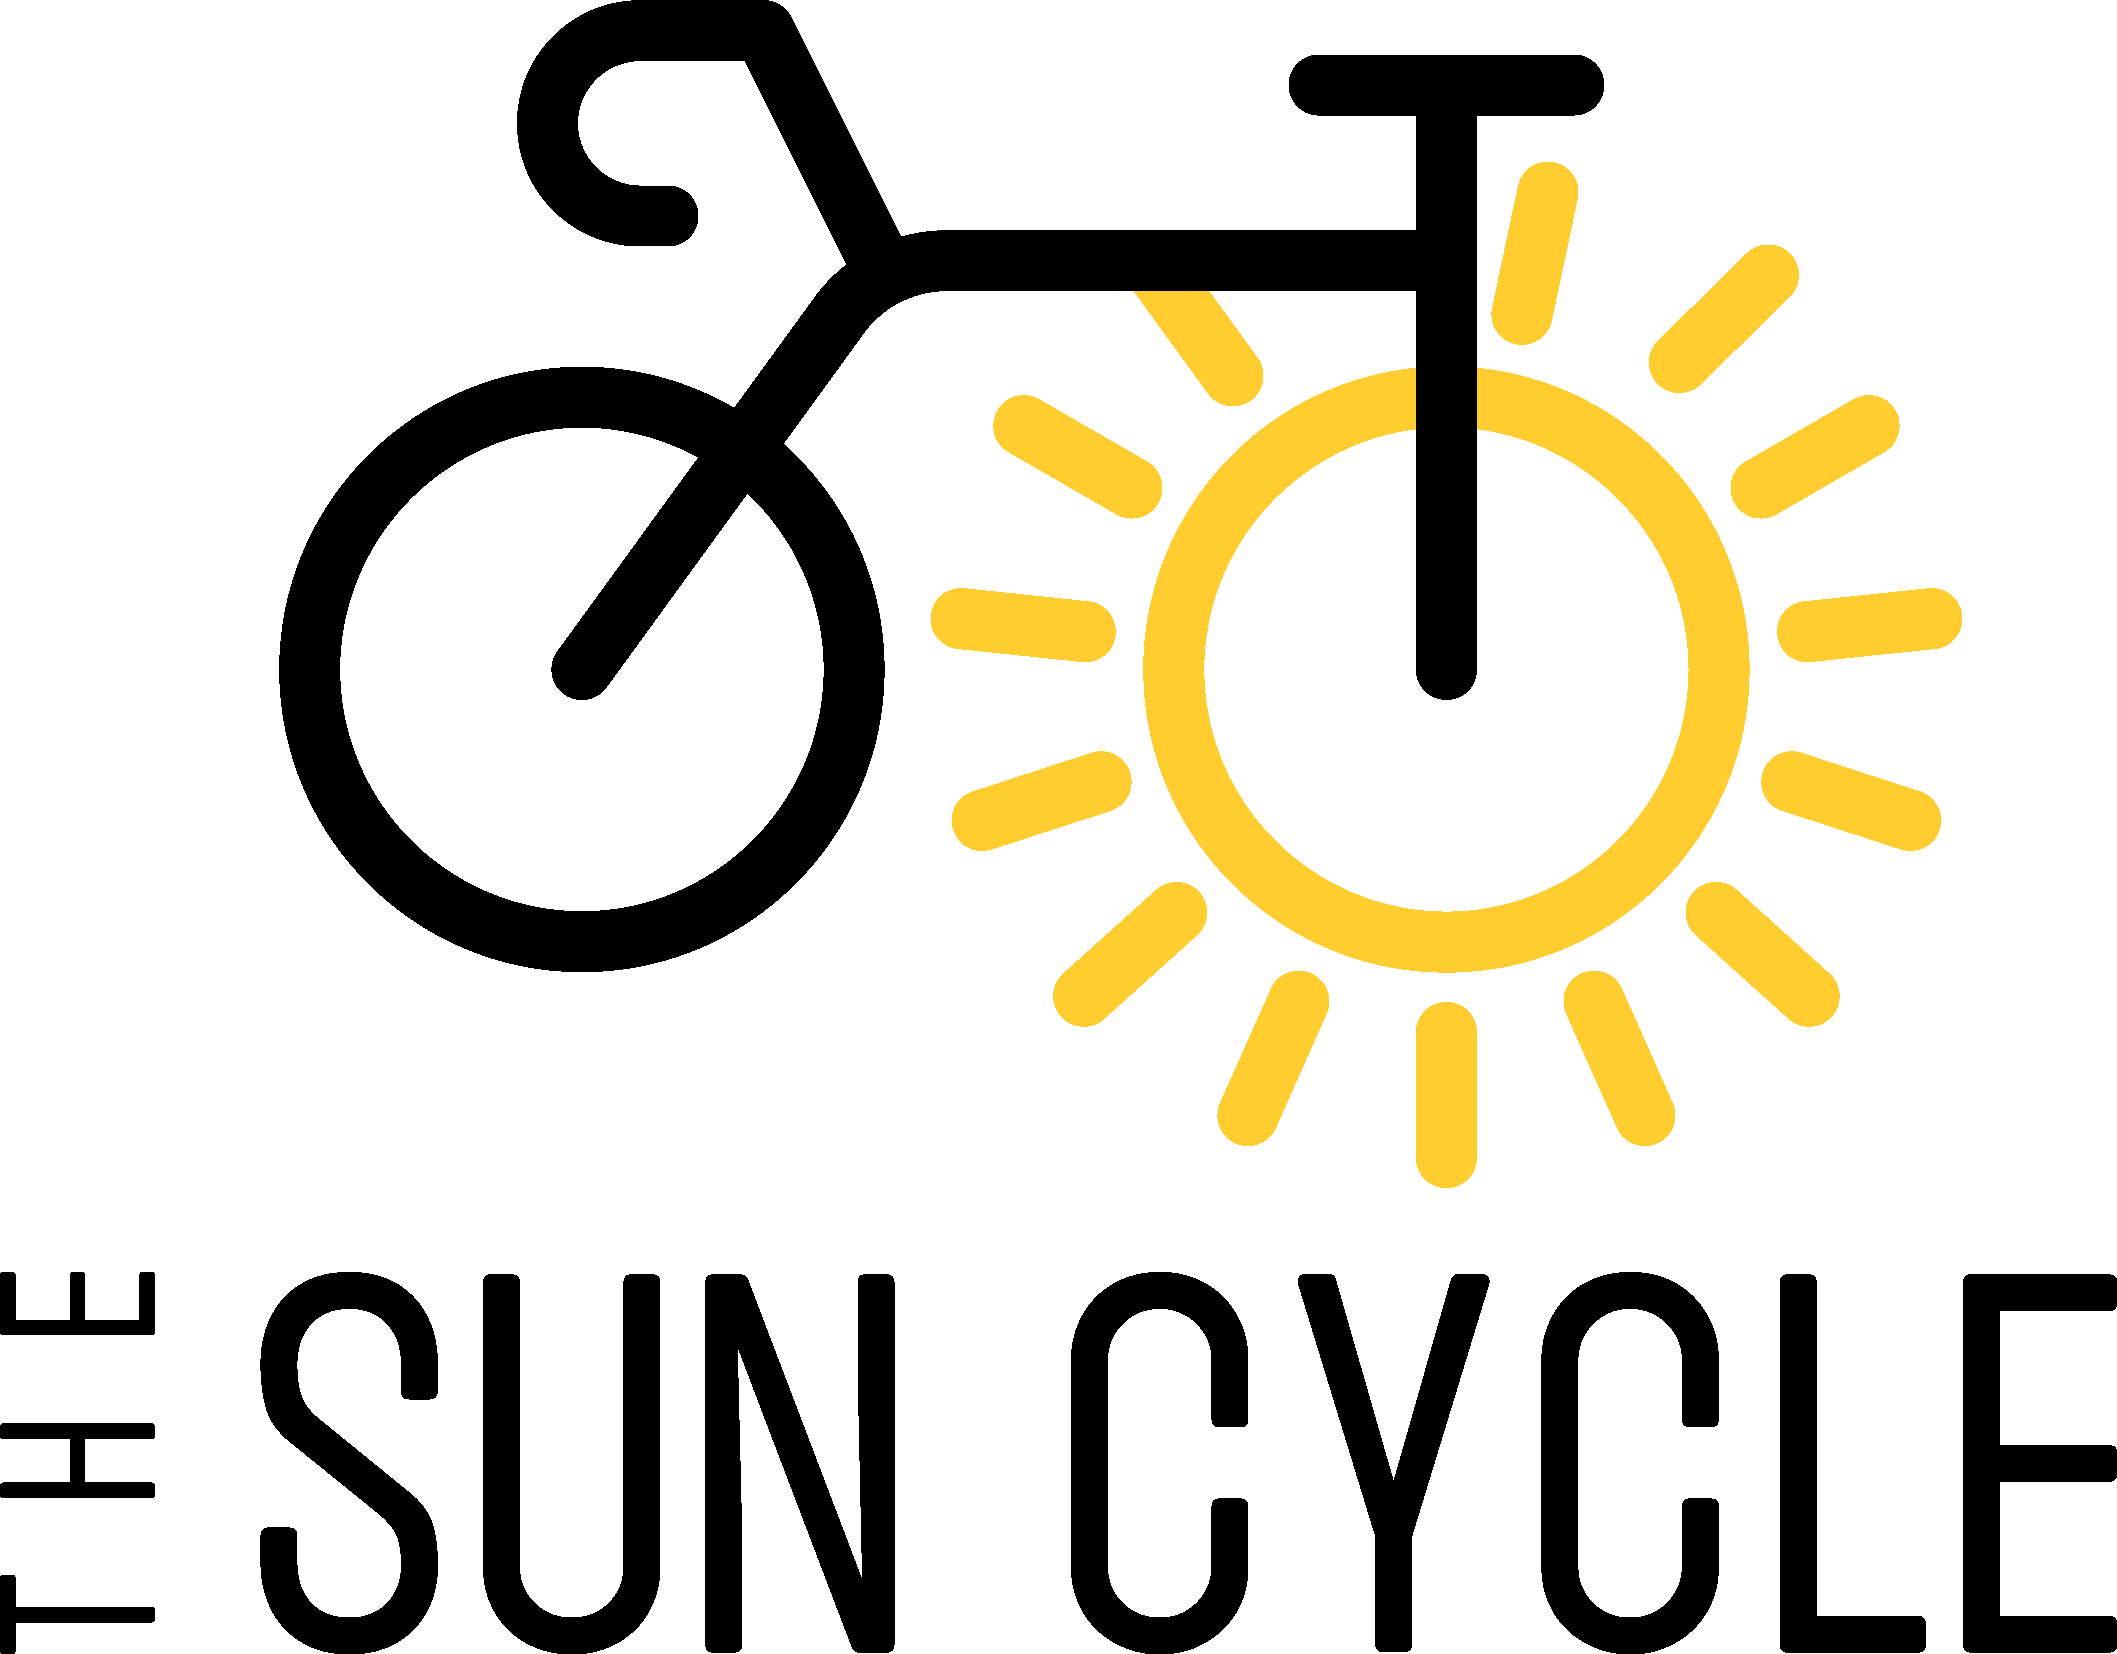 THE SUN CYCLE